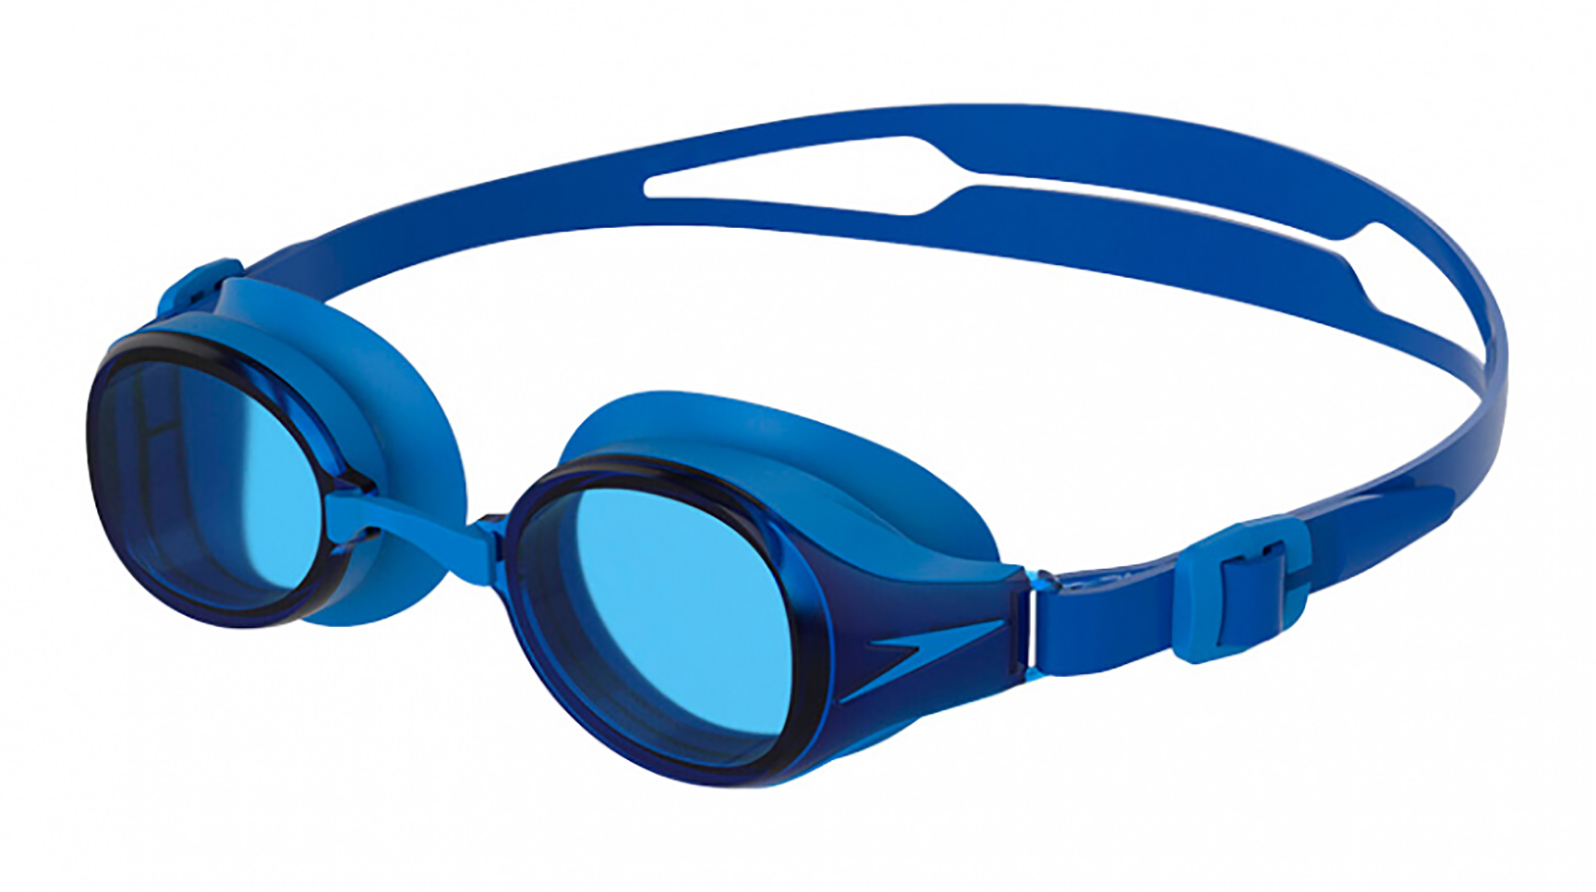 Speedo Очки для плавания Hydropure Optical F809 -3,5 speedo очки для плавания hydropure optical f809 4 0